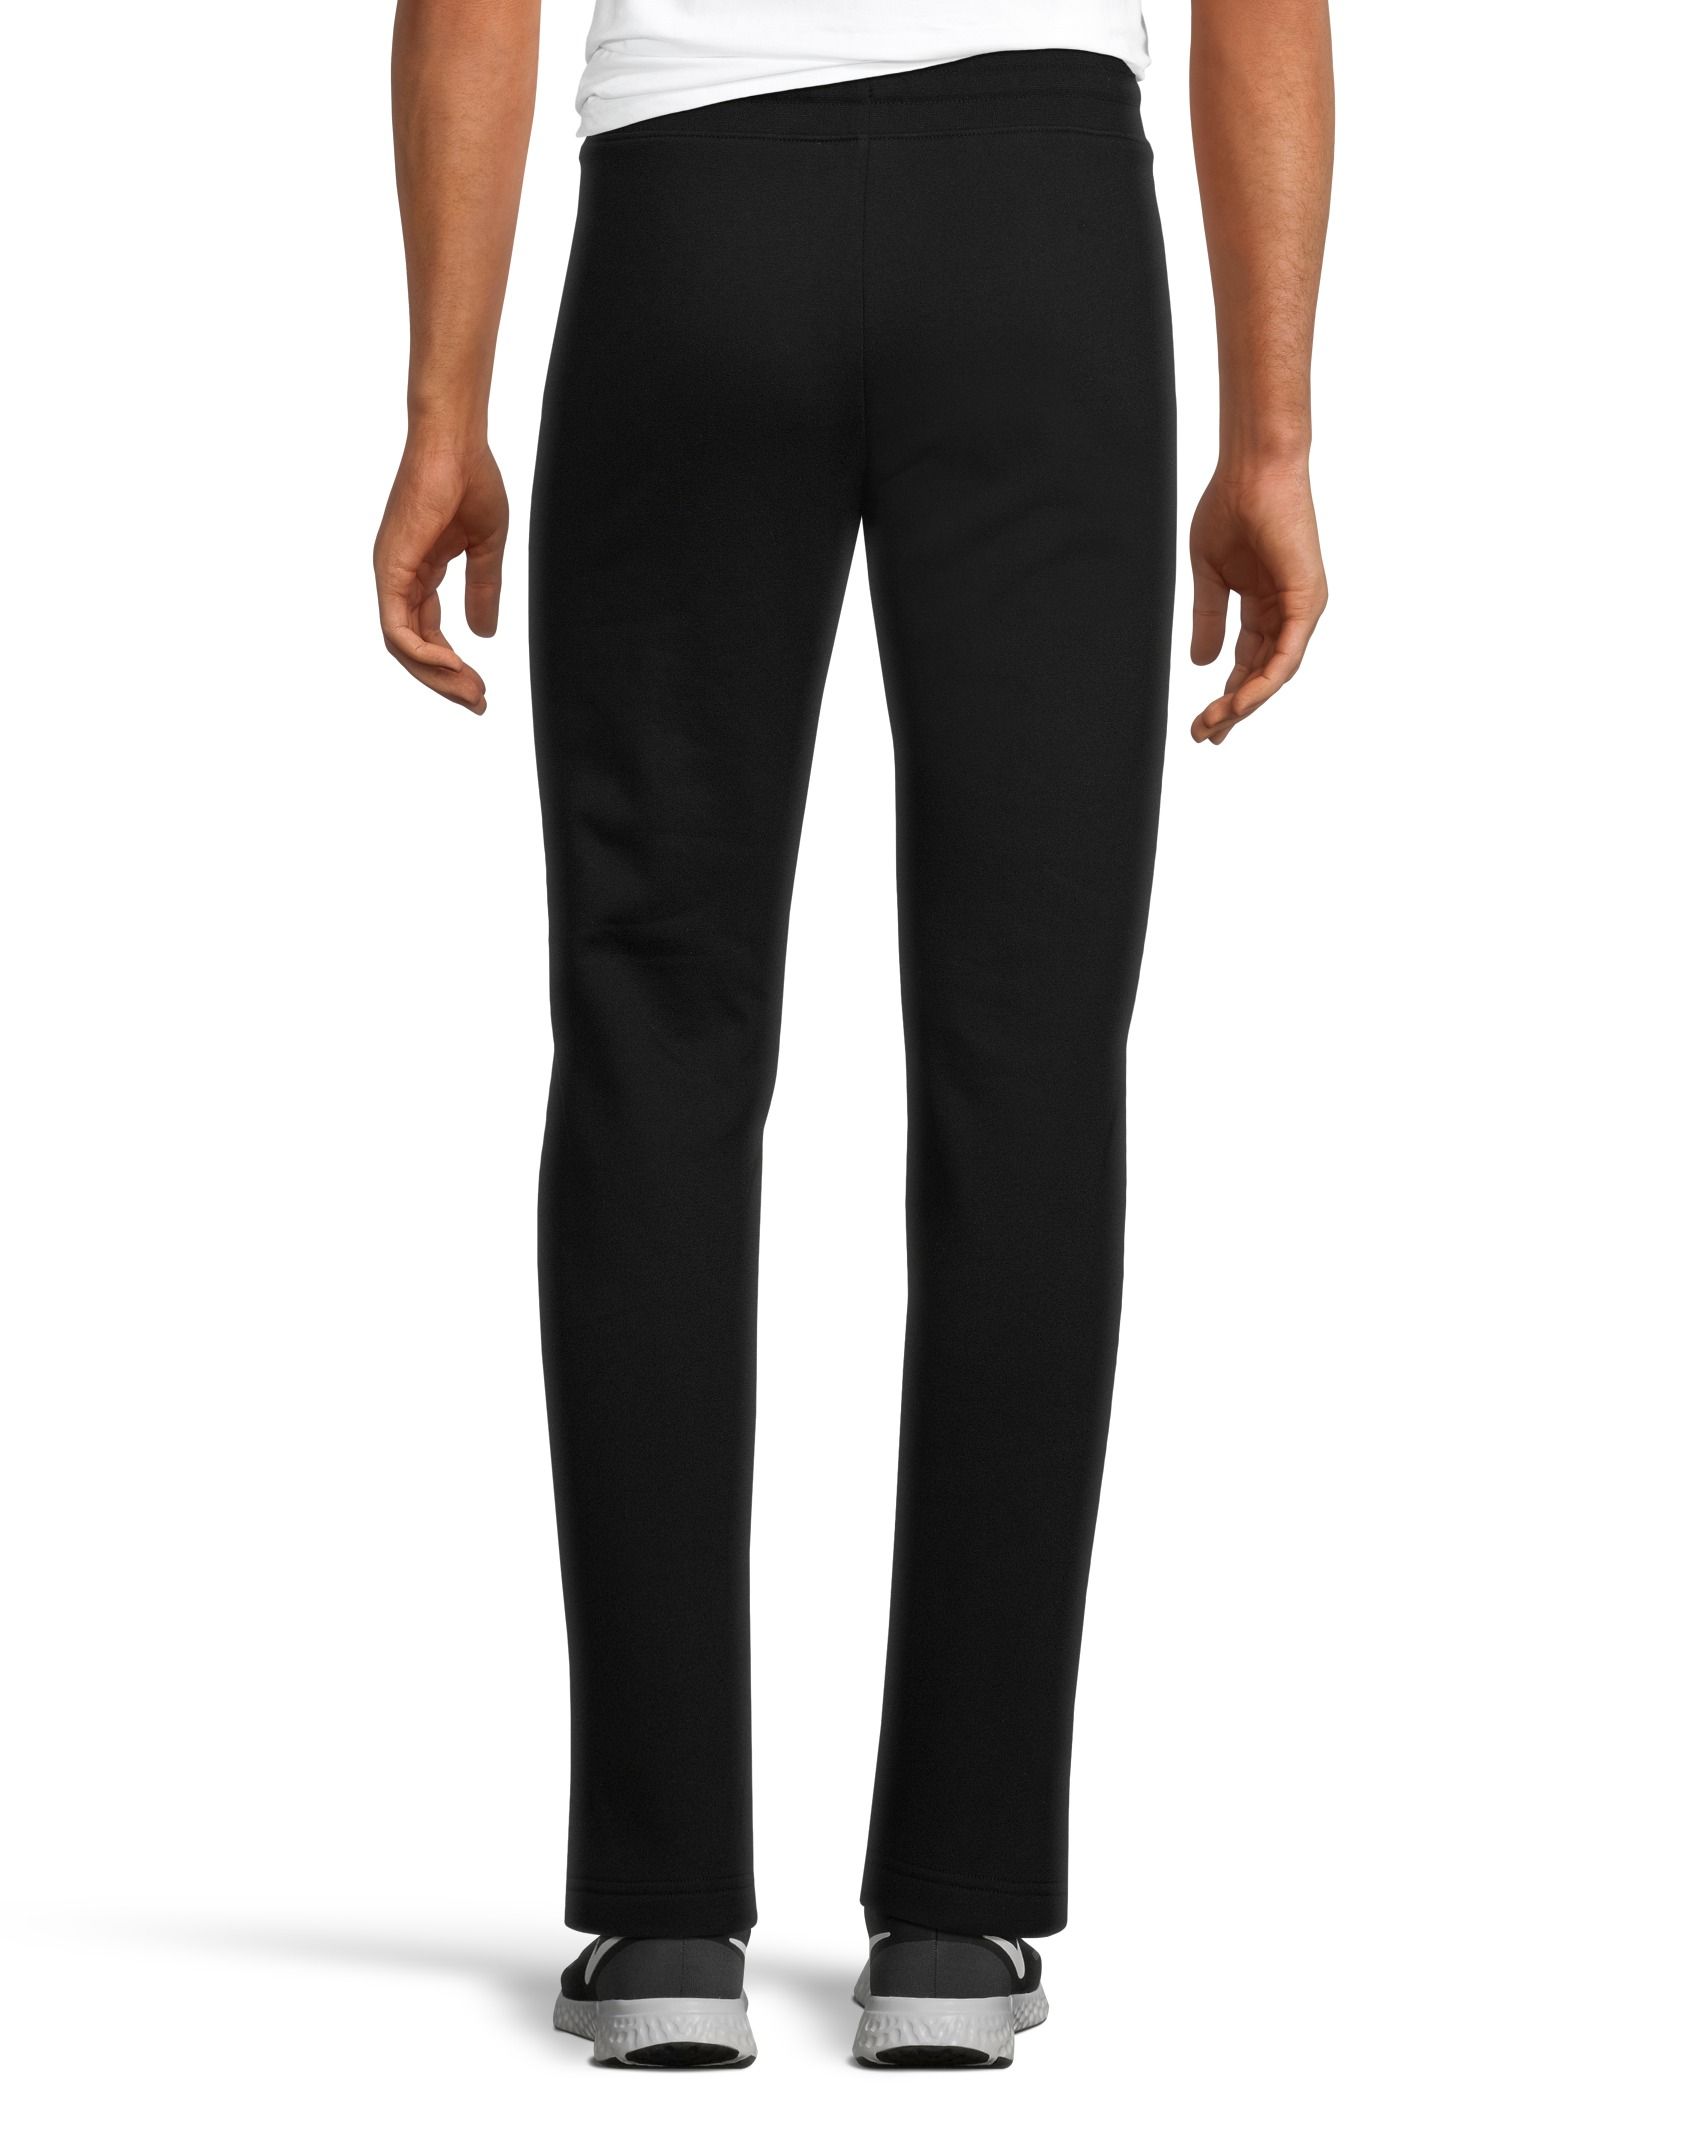 Buy V3E Girl's Casual Joggers Pants Sweatpants Yoga Bottoms Soft Brushed  Sports Track Pants (Black,28) at